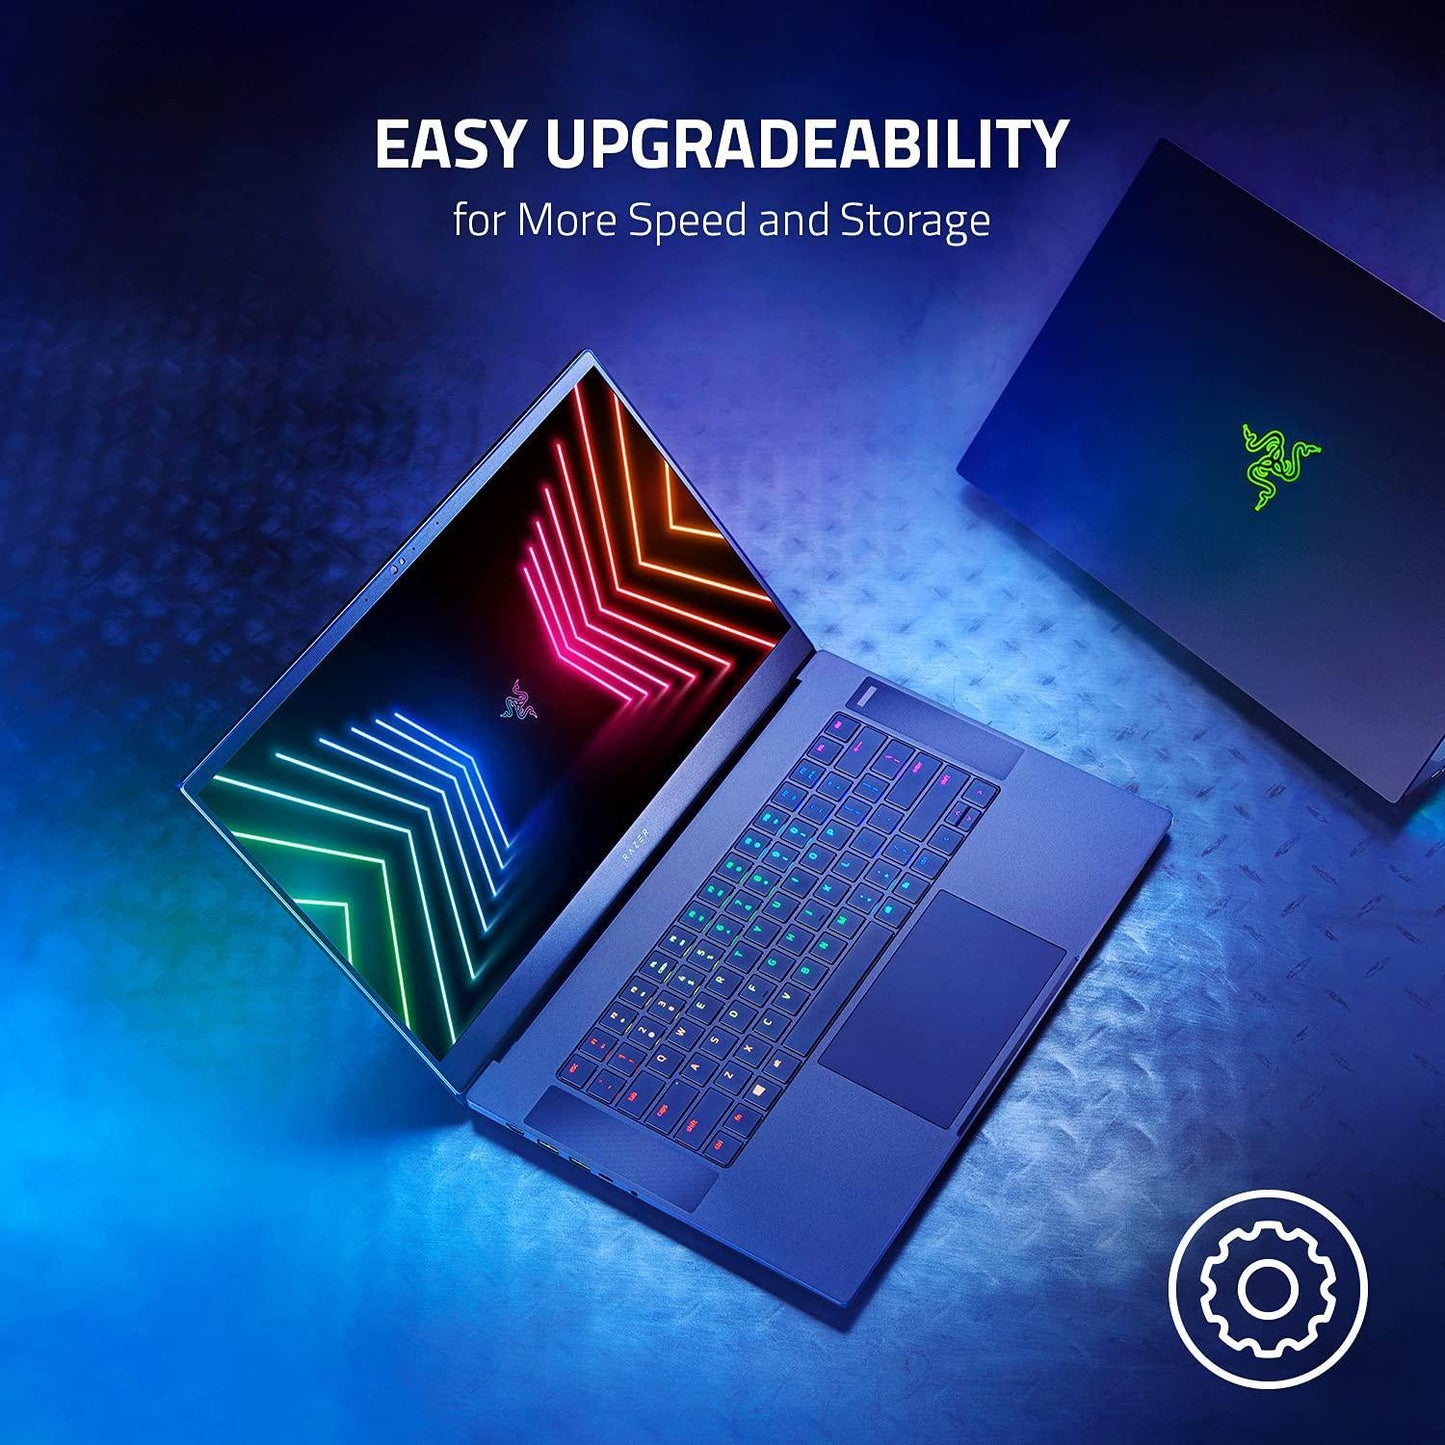 Razer Blade 15 Advanced Gaming Laptop 2021: Intel Core i7-11800H 8-Core - CNC Aluminum - Chroma RGB - THX Spatial Audio - Thunderbolt 3 - Store For Gamers